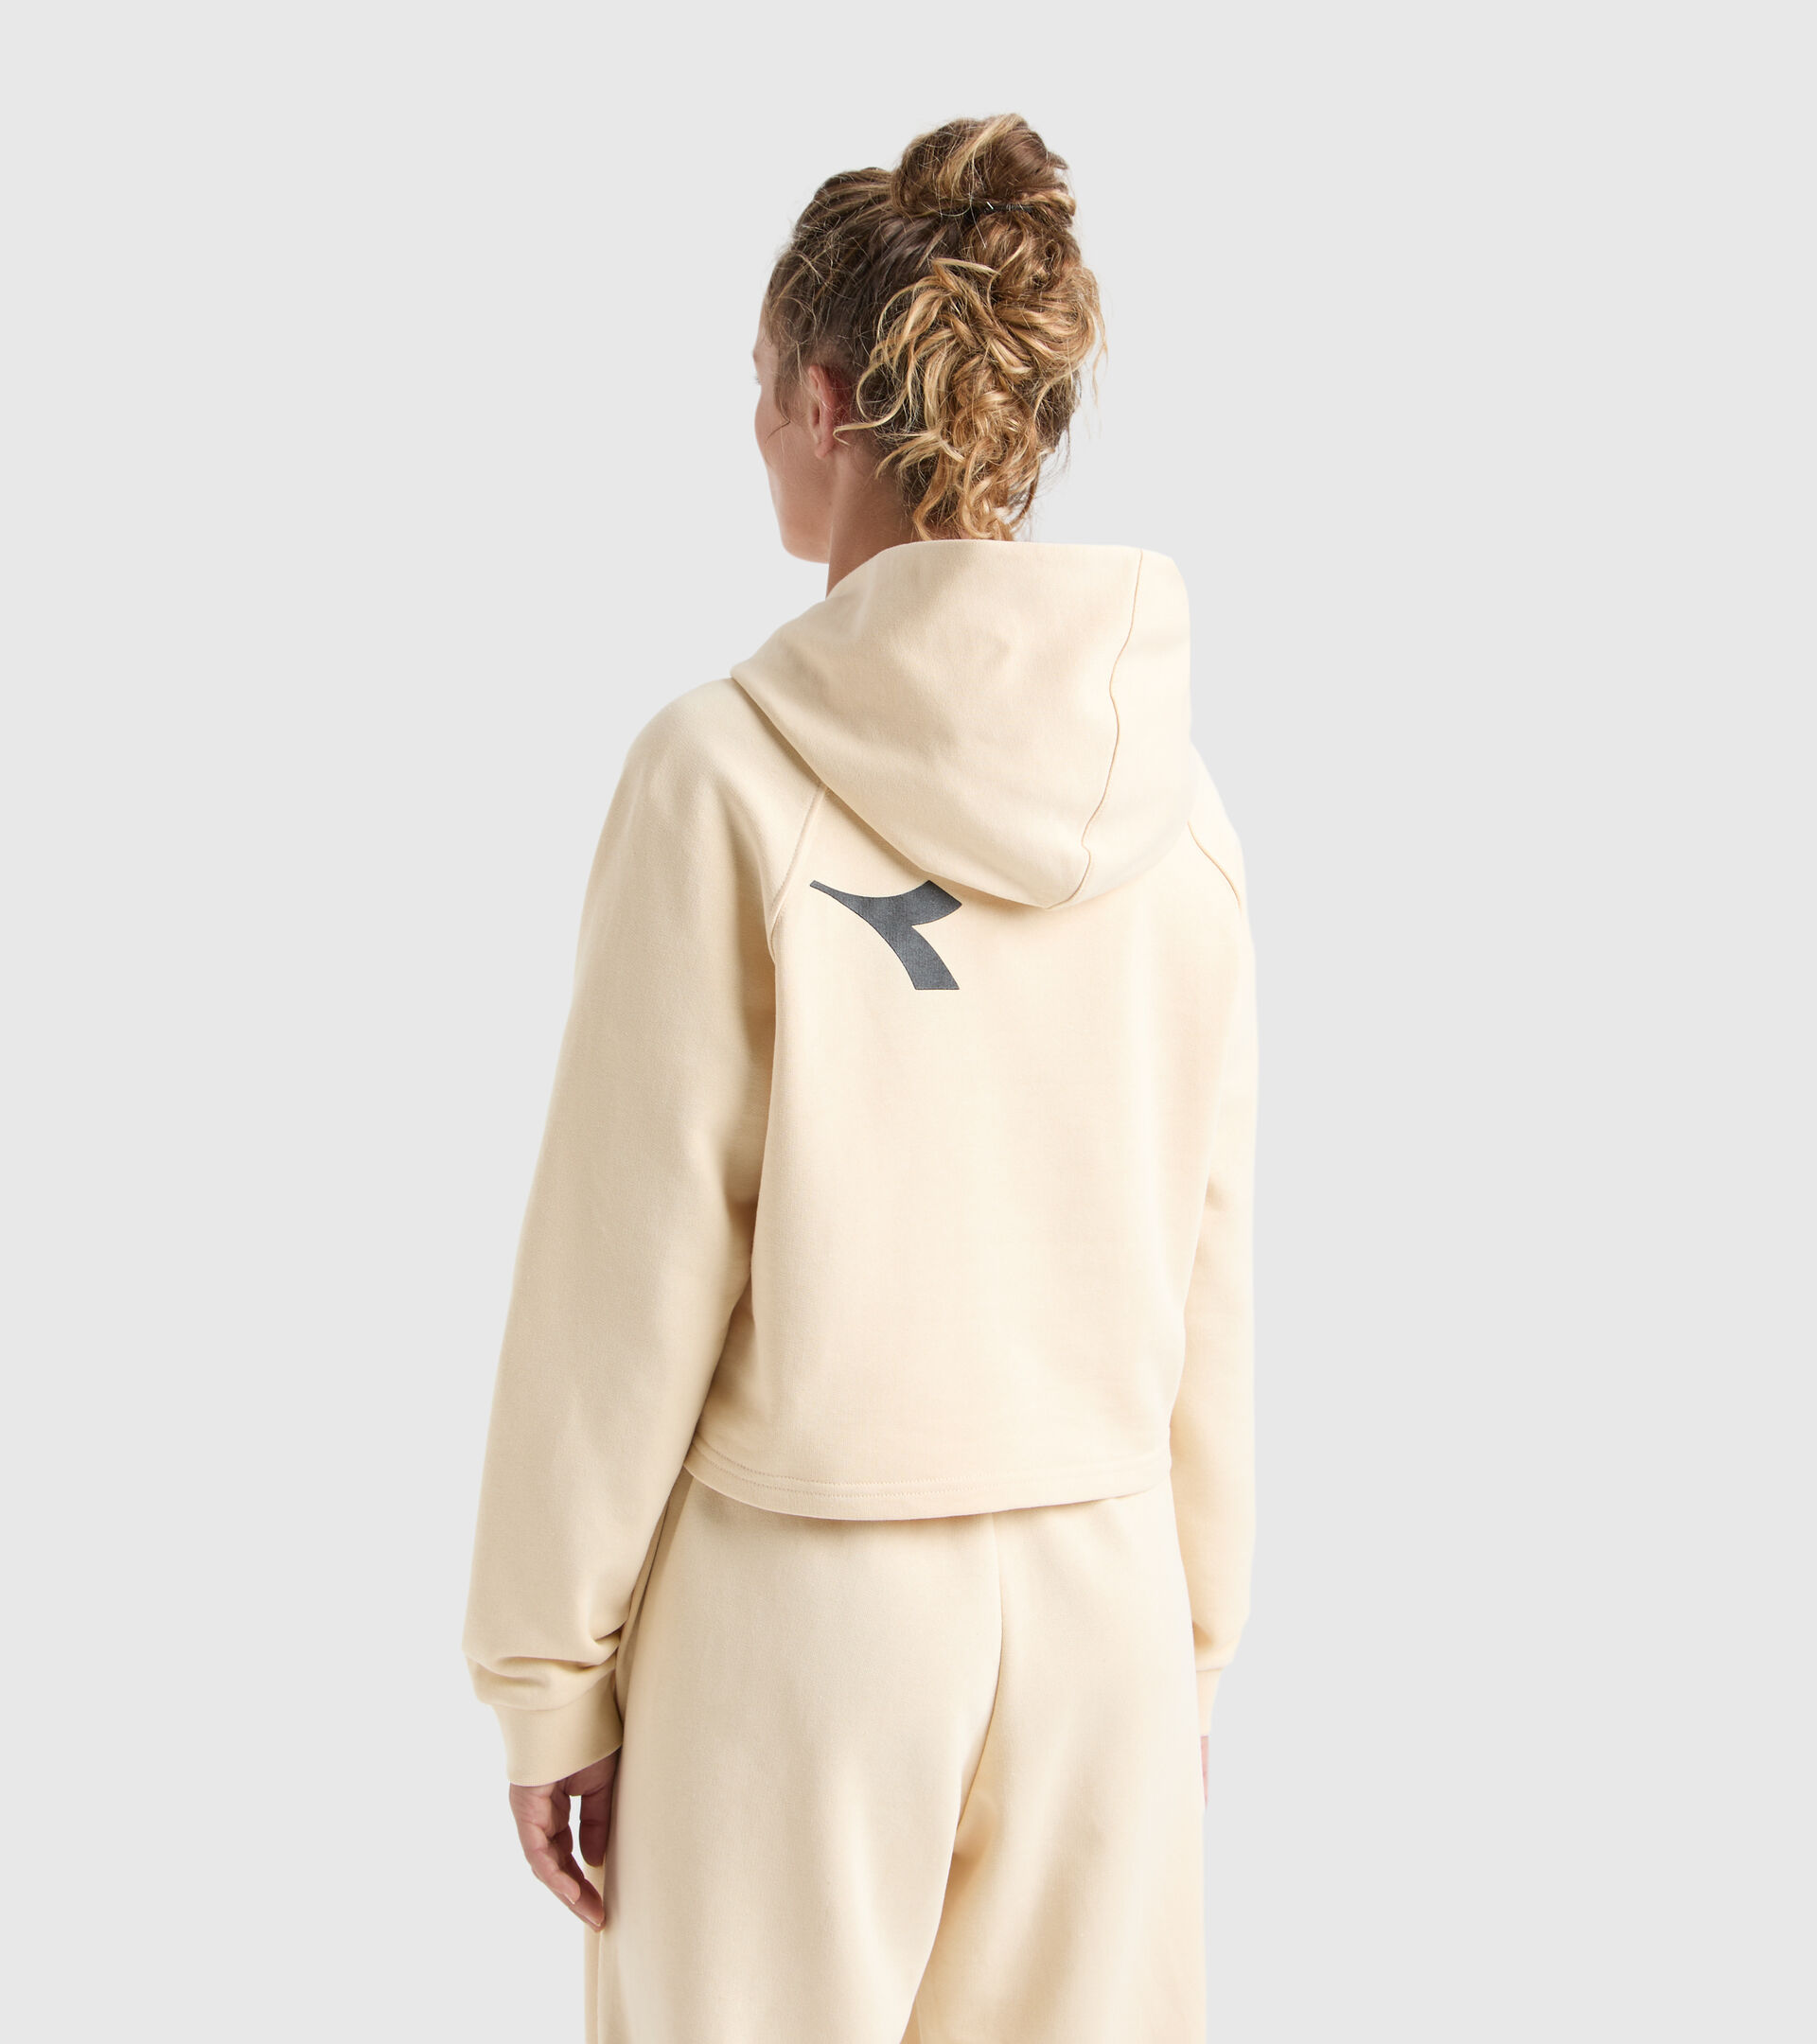 Cotton hooded sweatshirt - Women’s L. HOODIE CROP MANIFESTO NAVAJO BEIGE - Diadora